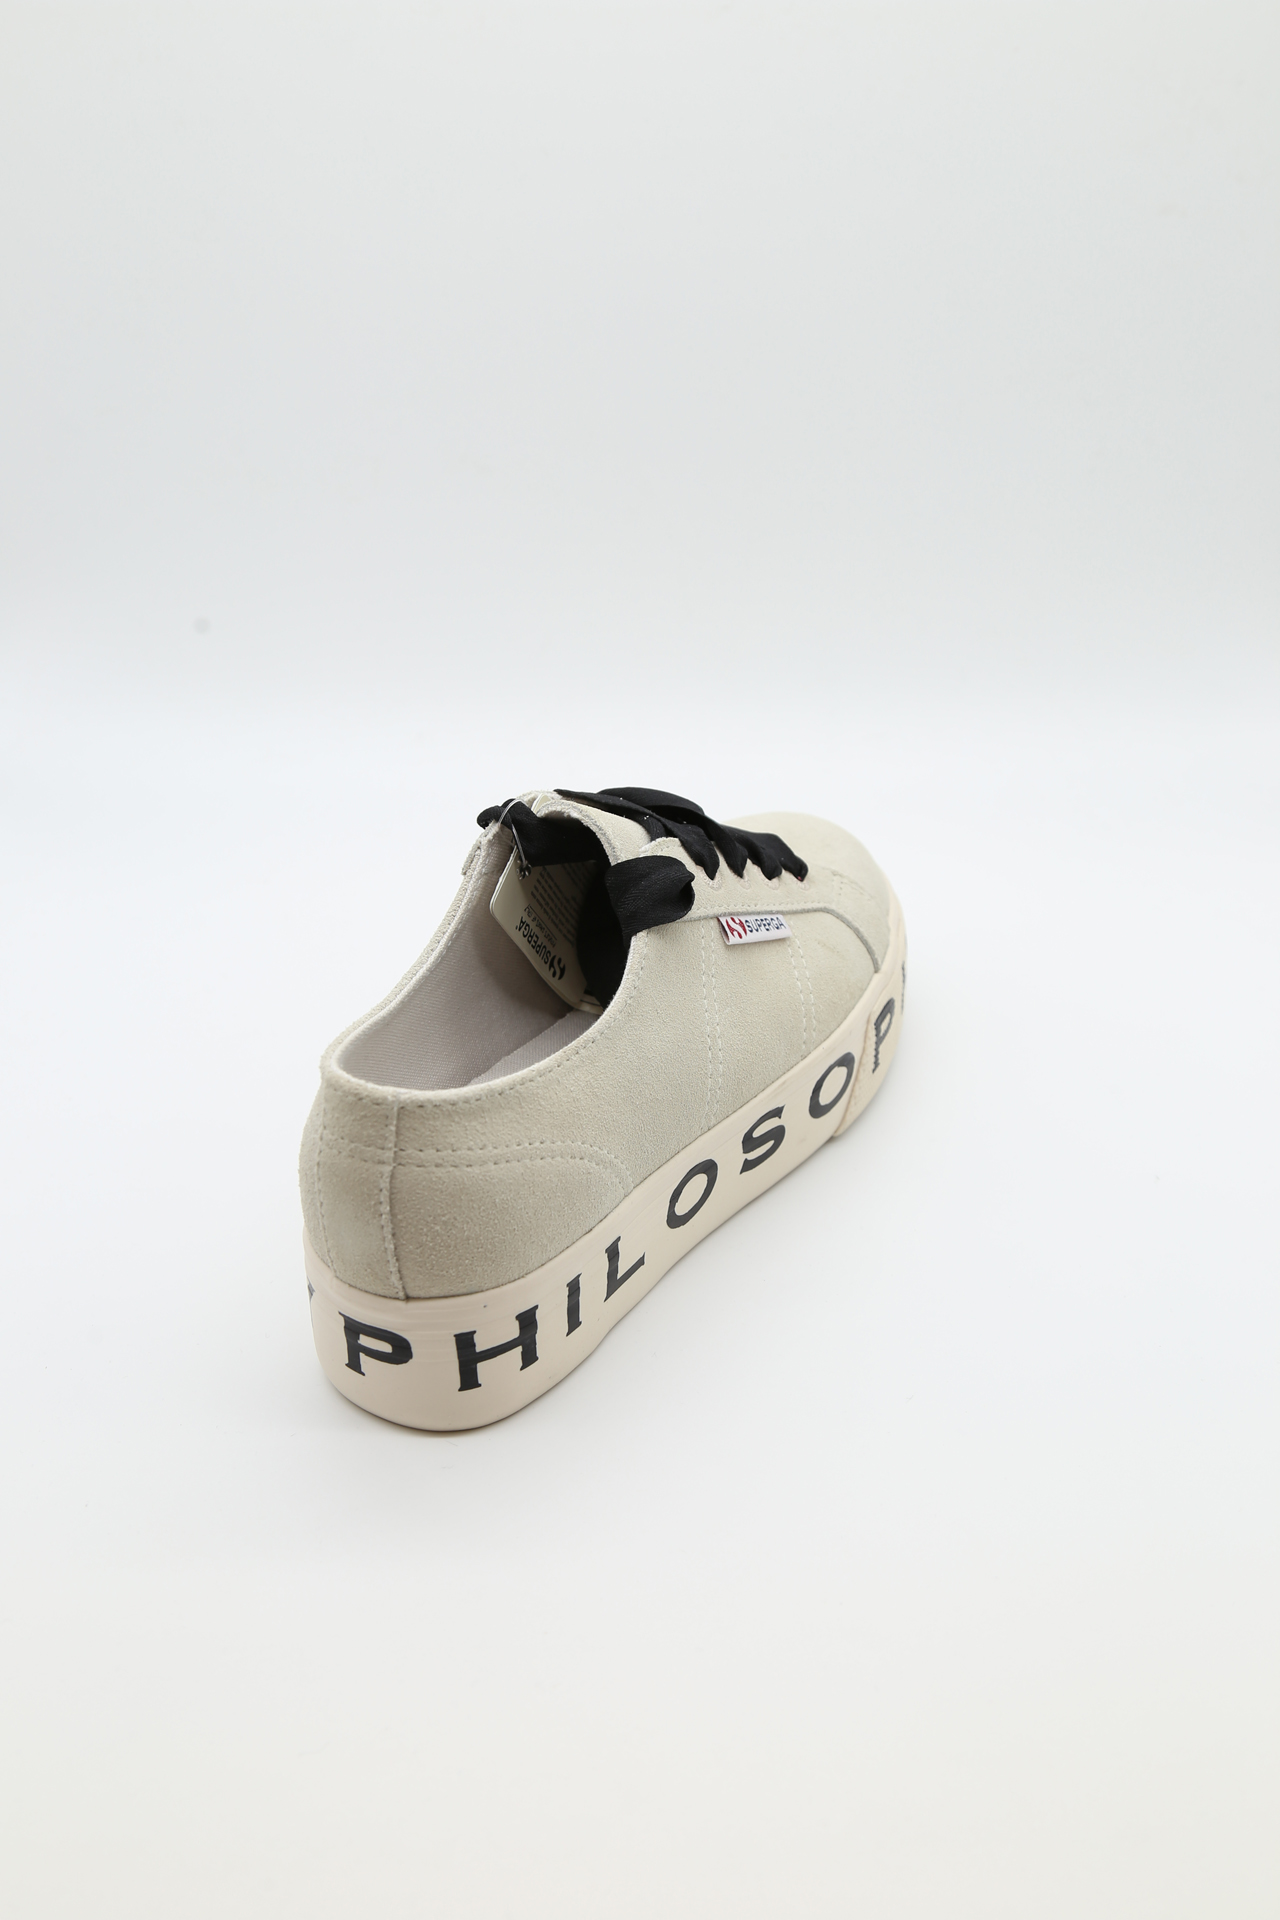 Philosophy - Superga, Sneaker